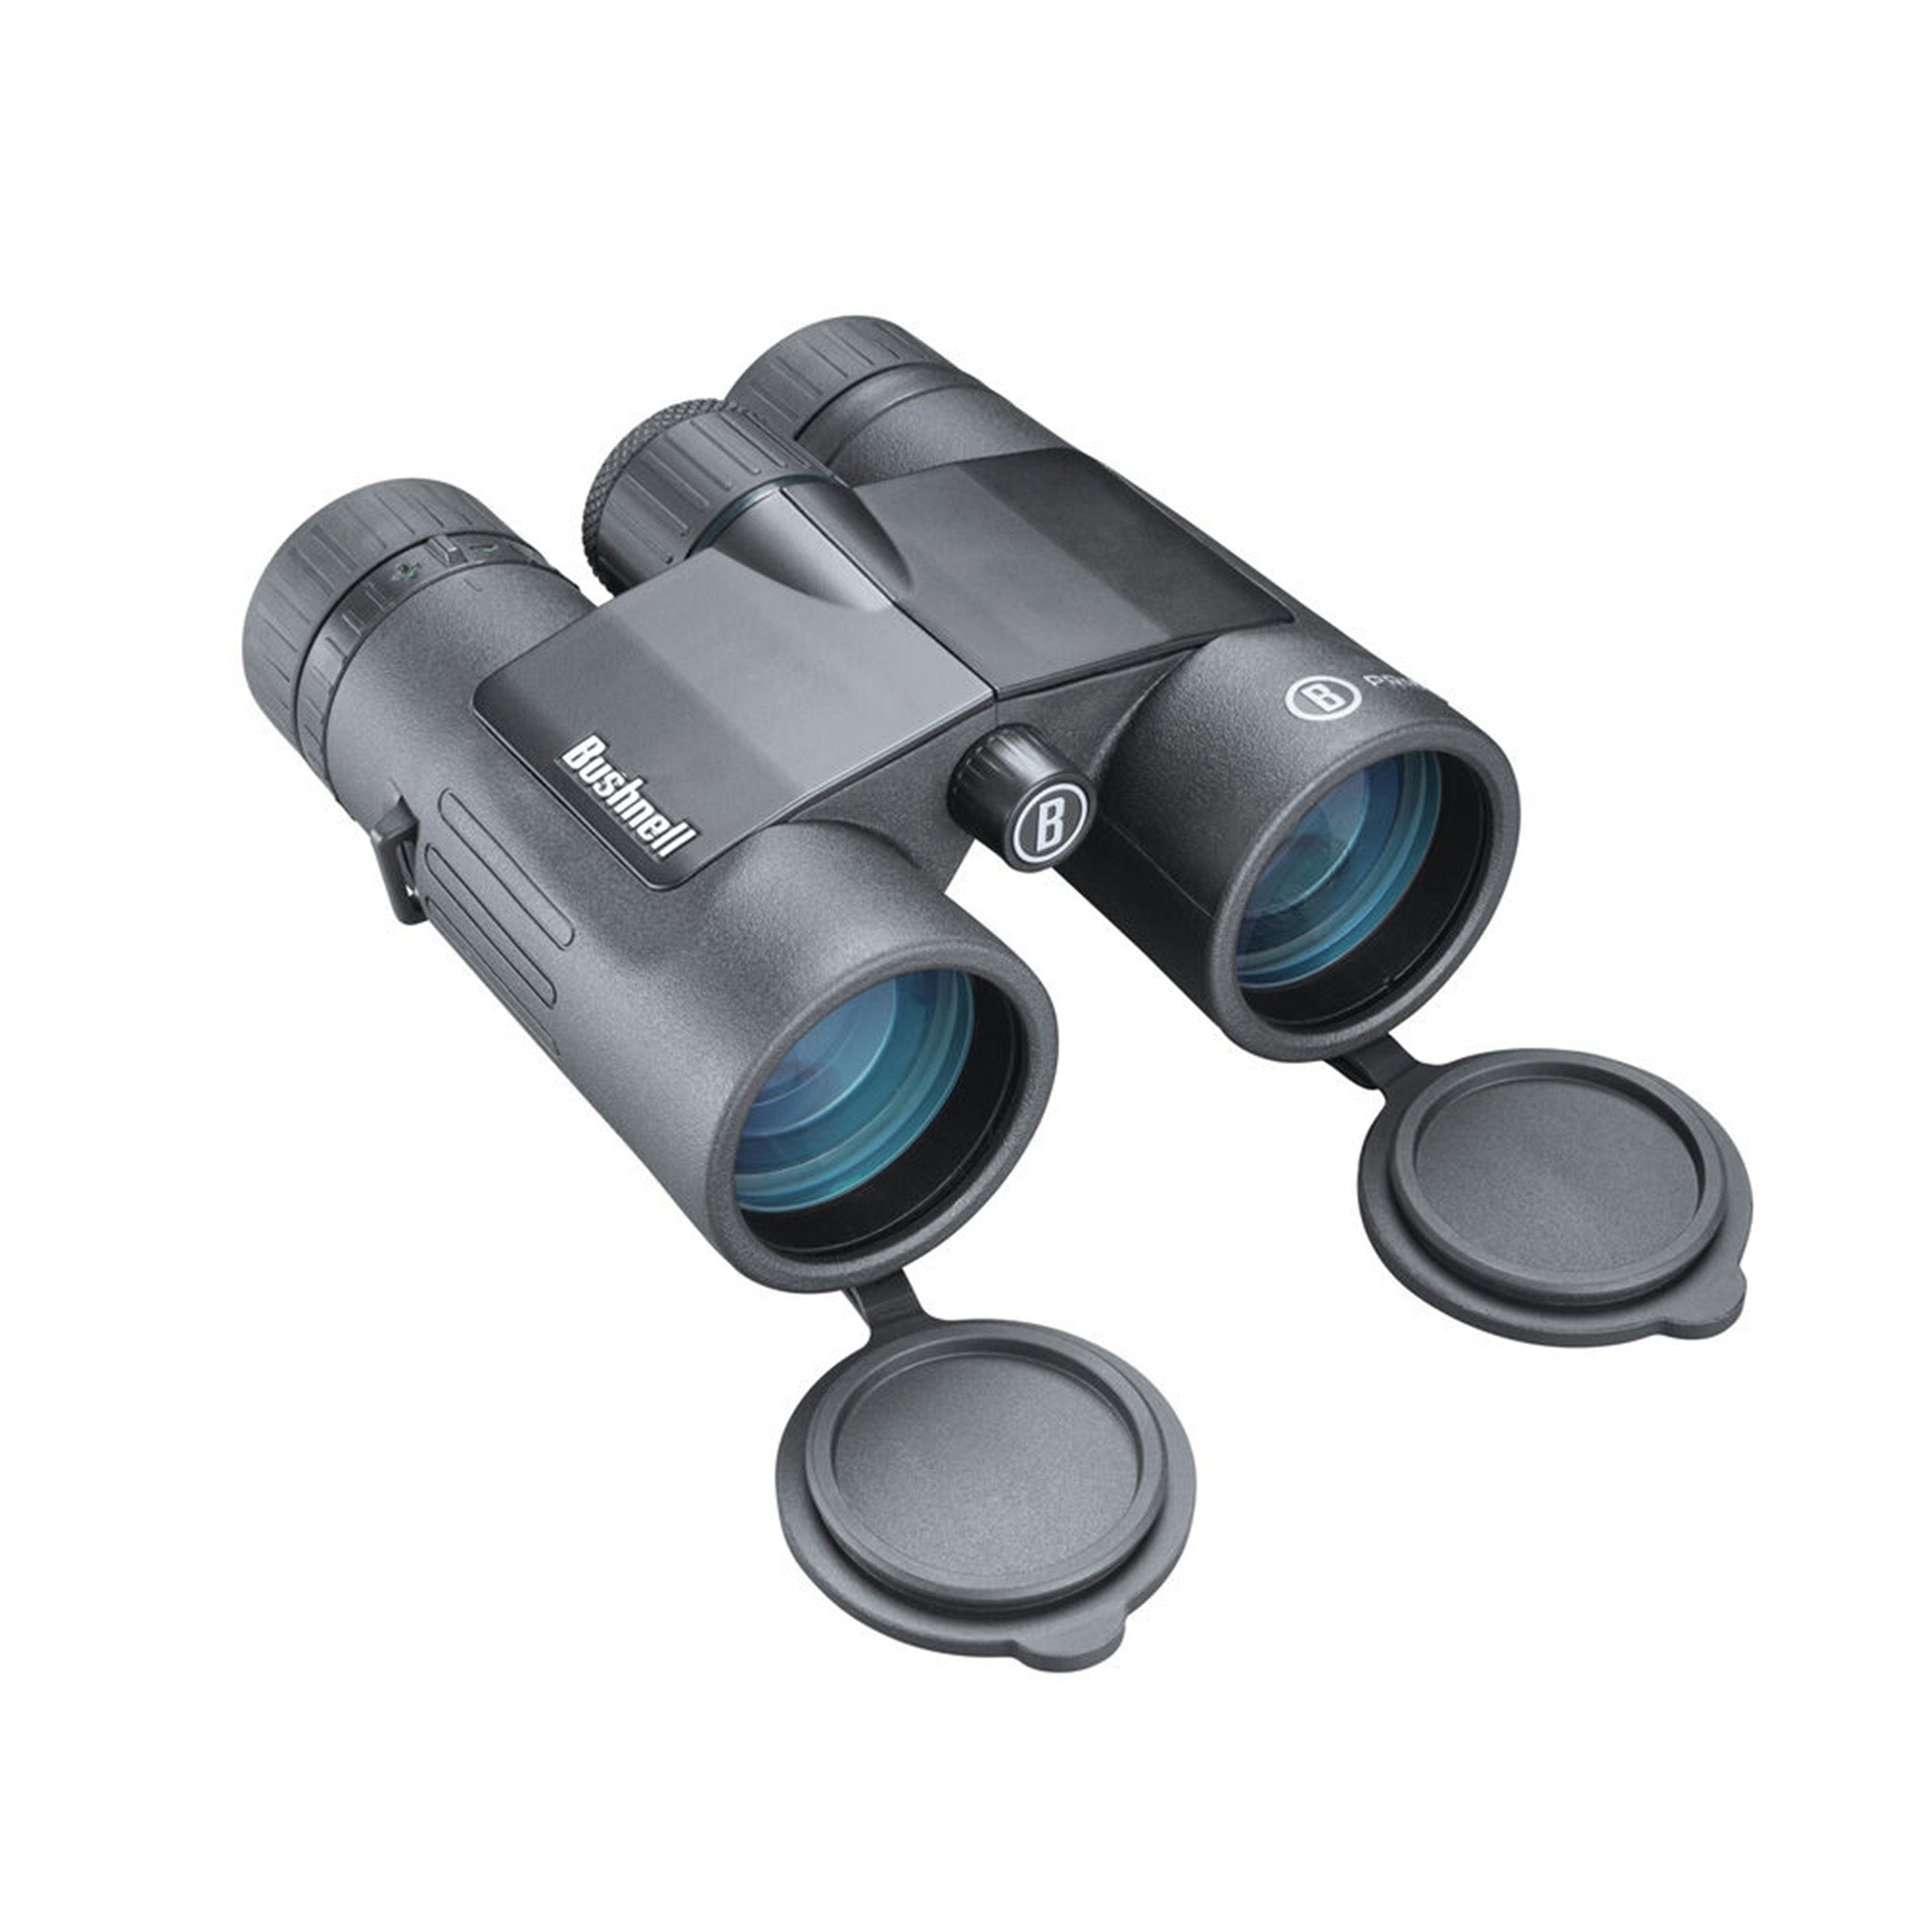 Bushnell Prime Binoculars